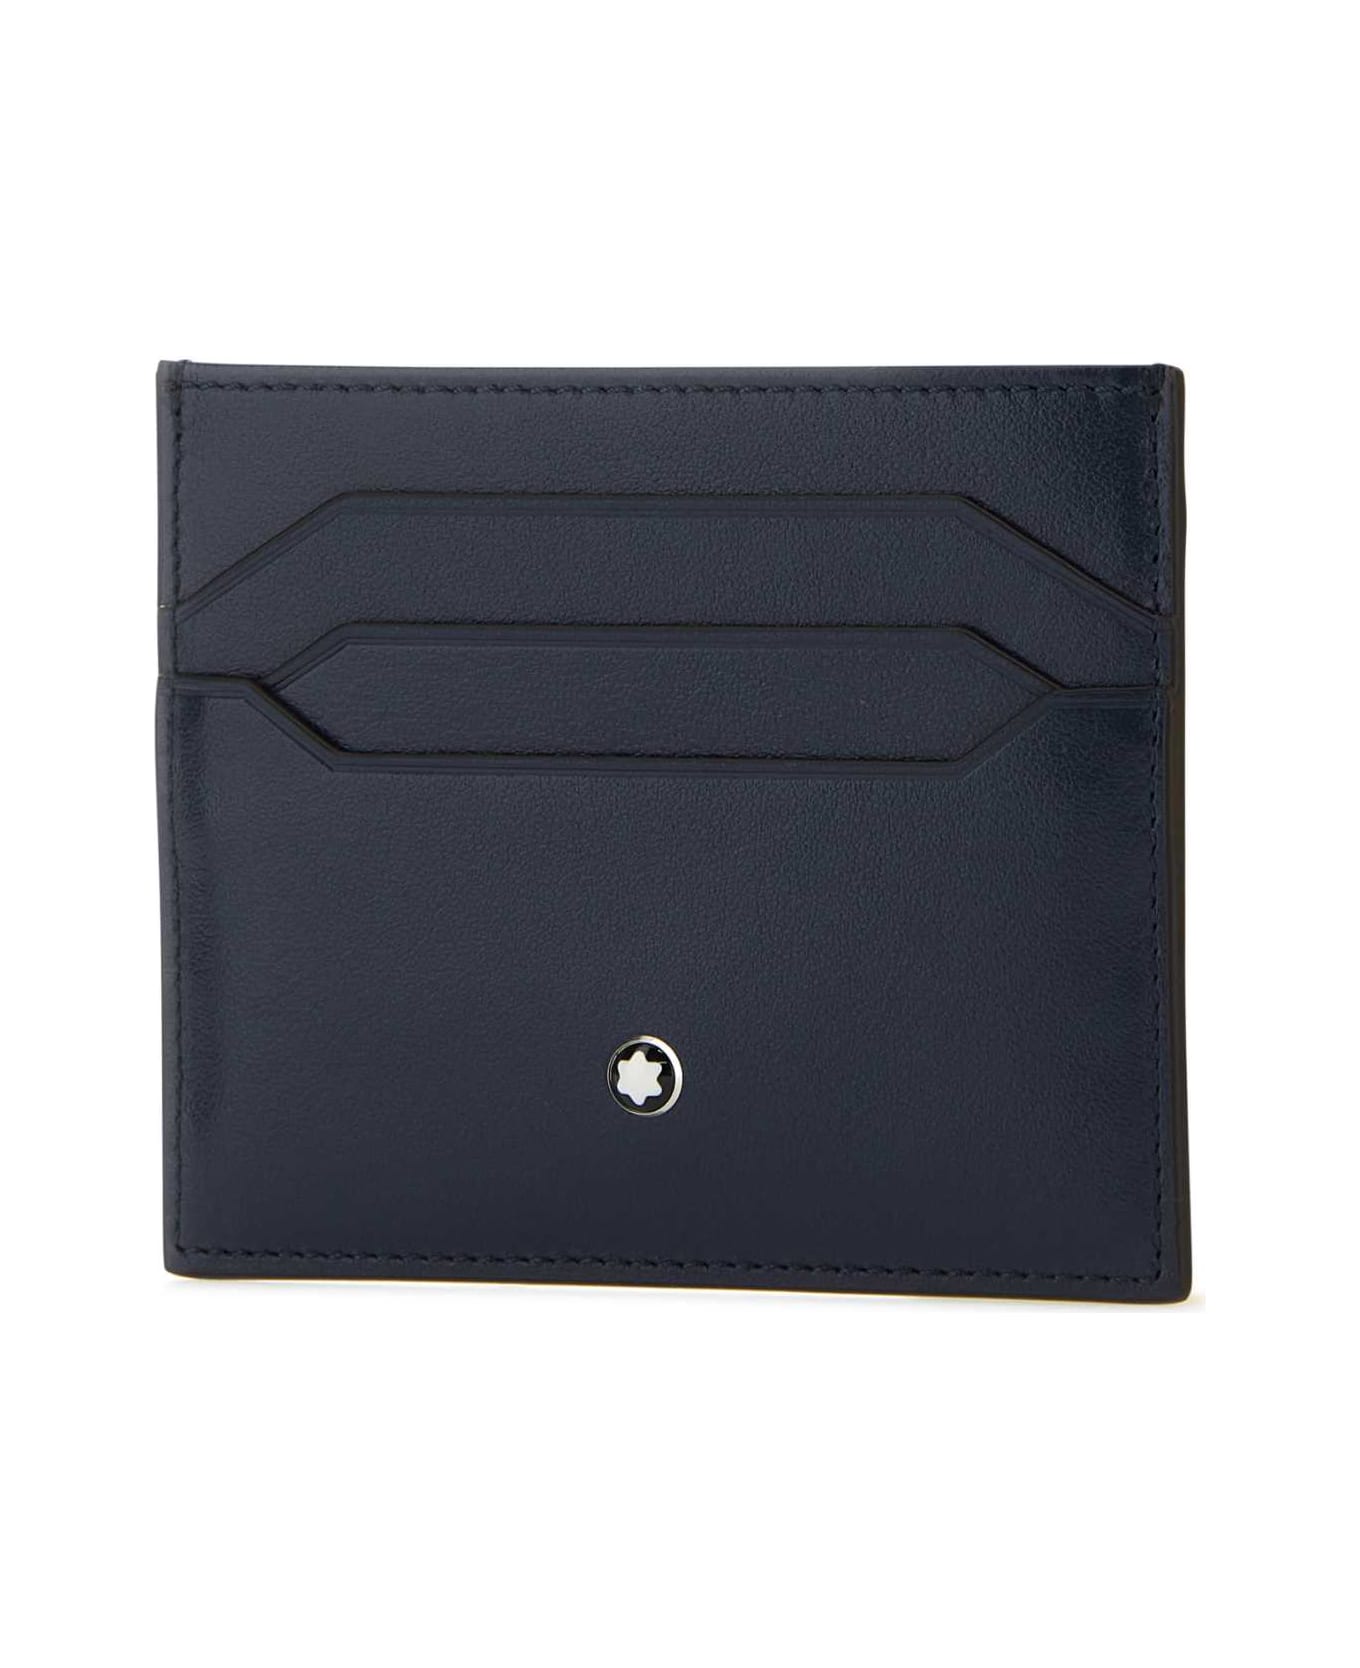 Montblanc Blue Leather Cardholder - INKBLUE